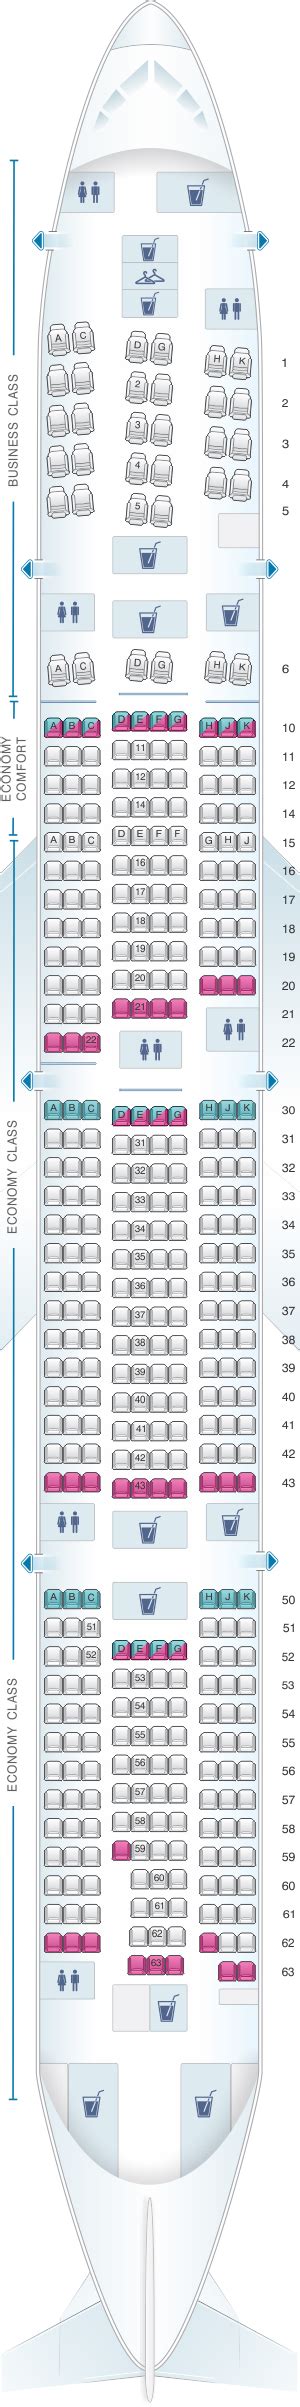 Klm Boeing 777 200 Seat Map Tutor Suhu